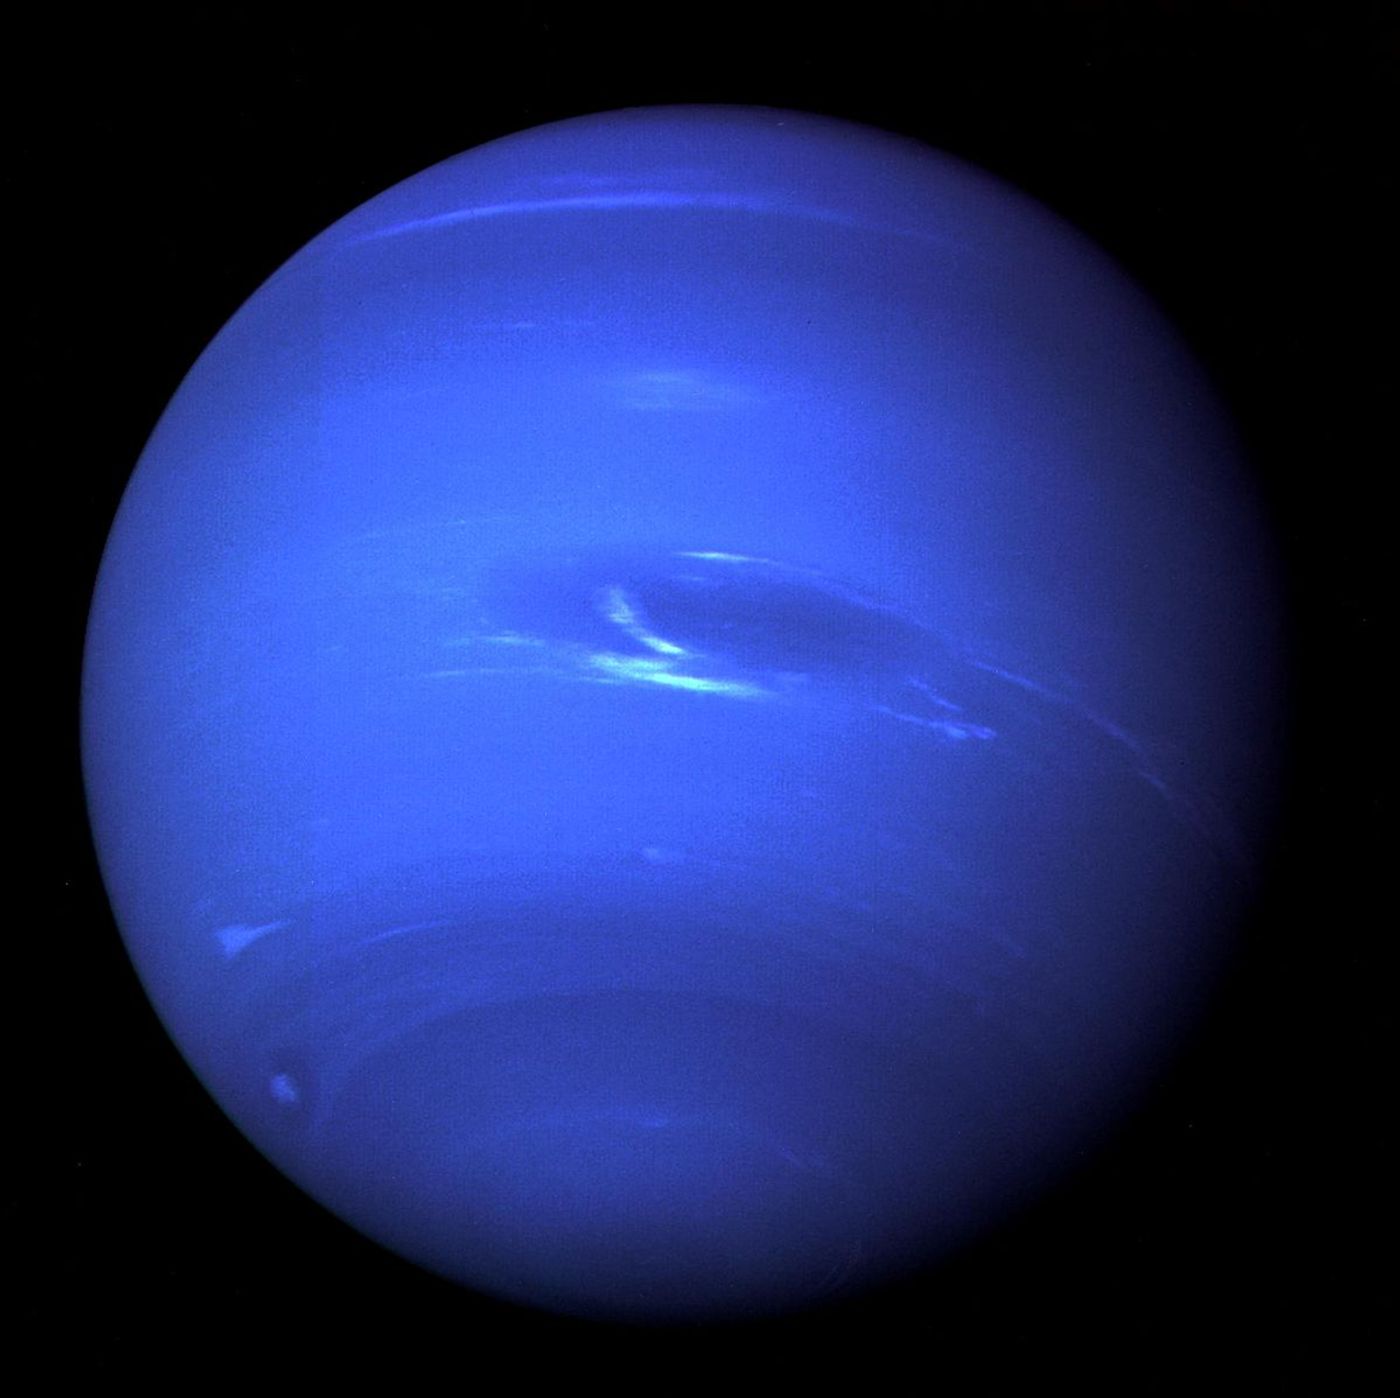 Neptune imaged by Voyager 2. (Image Credit: NASA JPL)